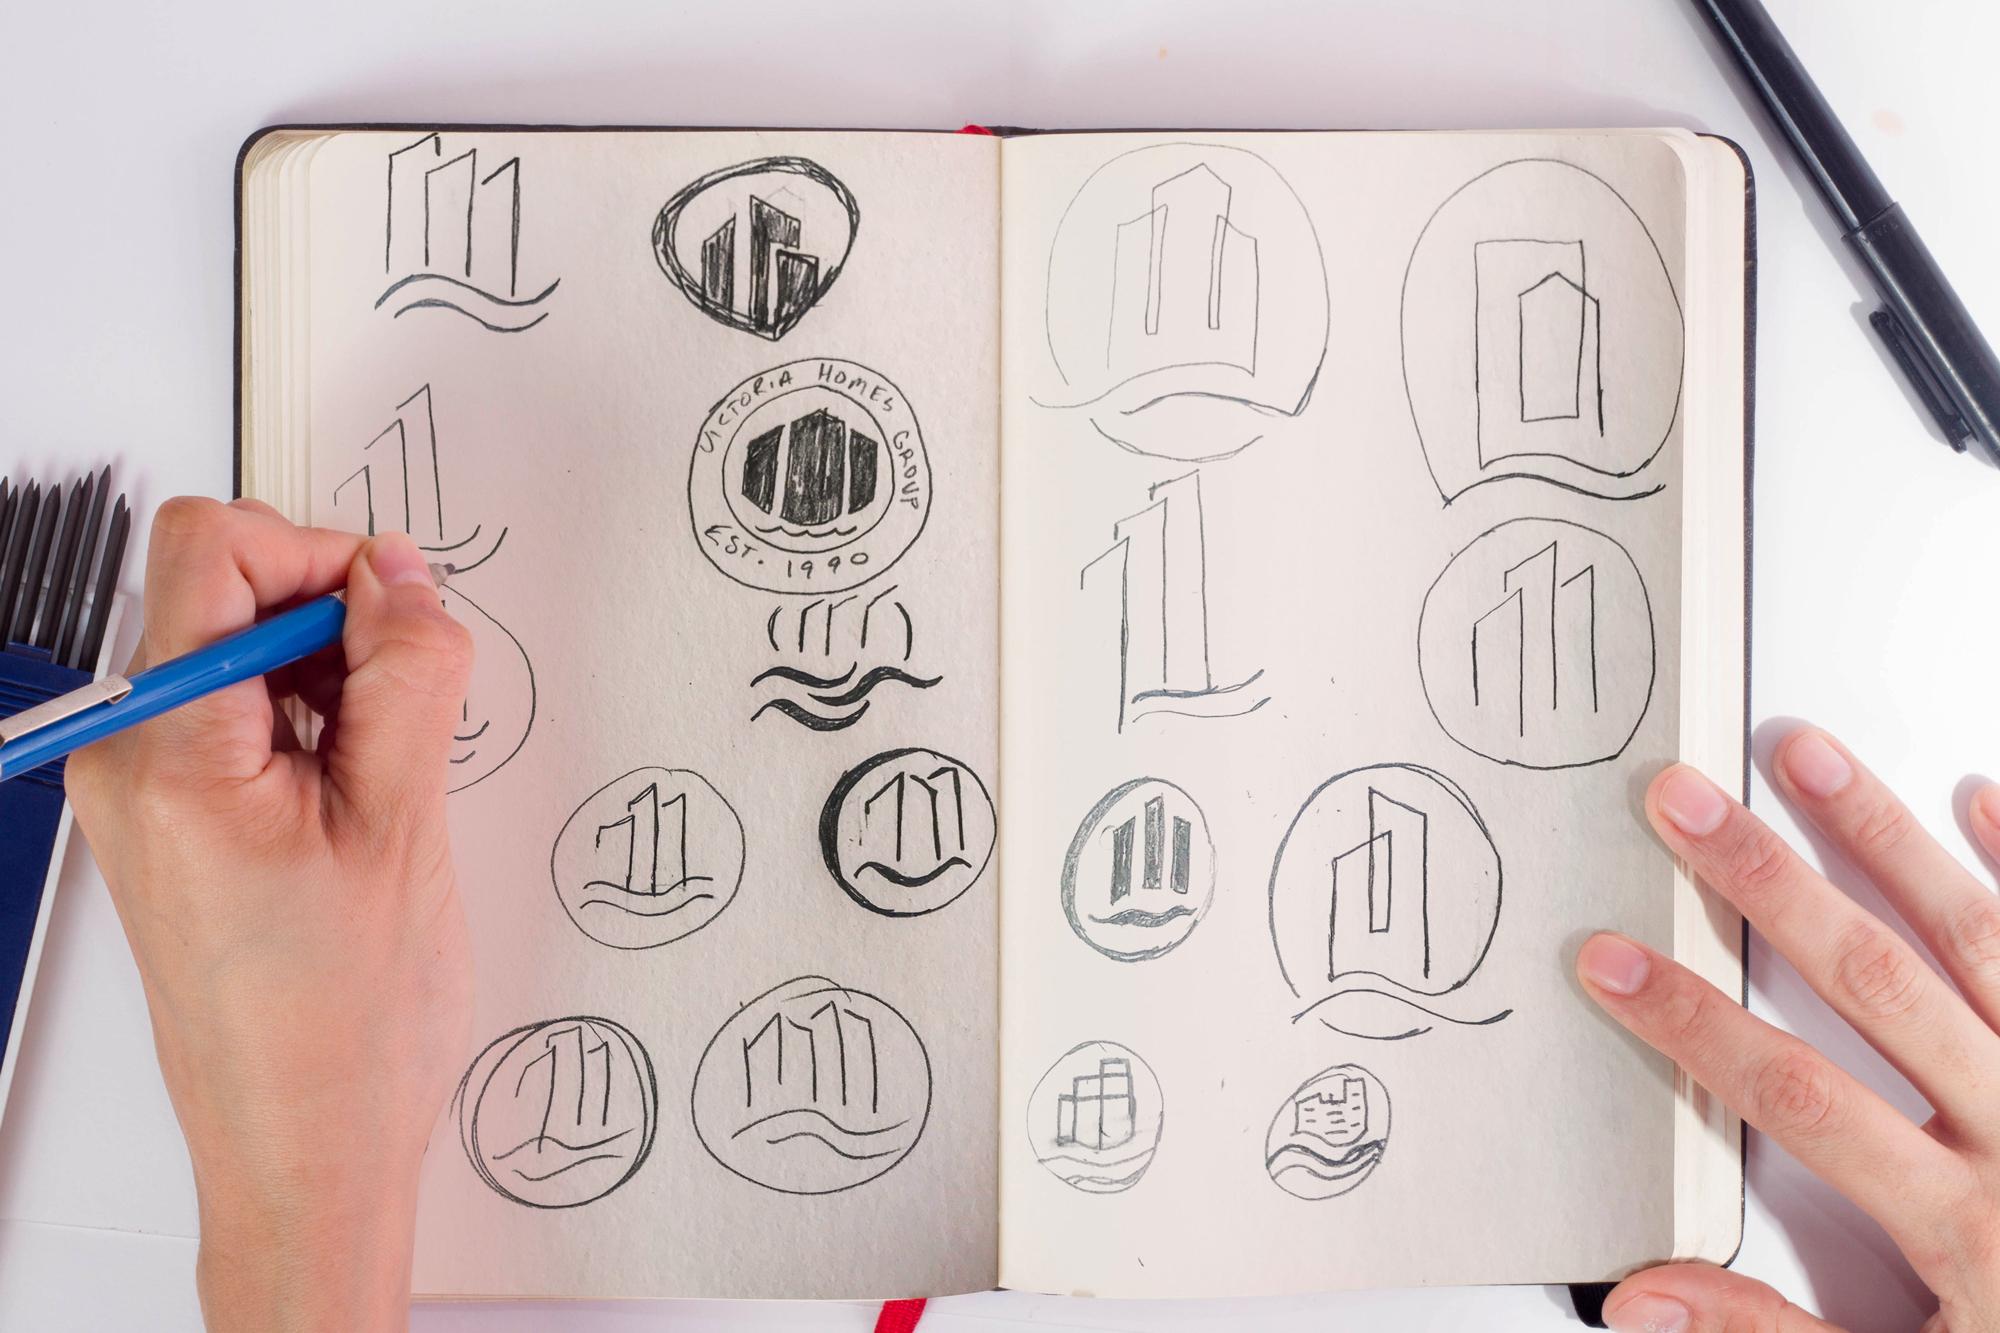 Hand illustrated branding drafts for a unique logo design